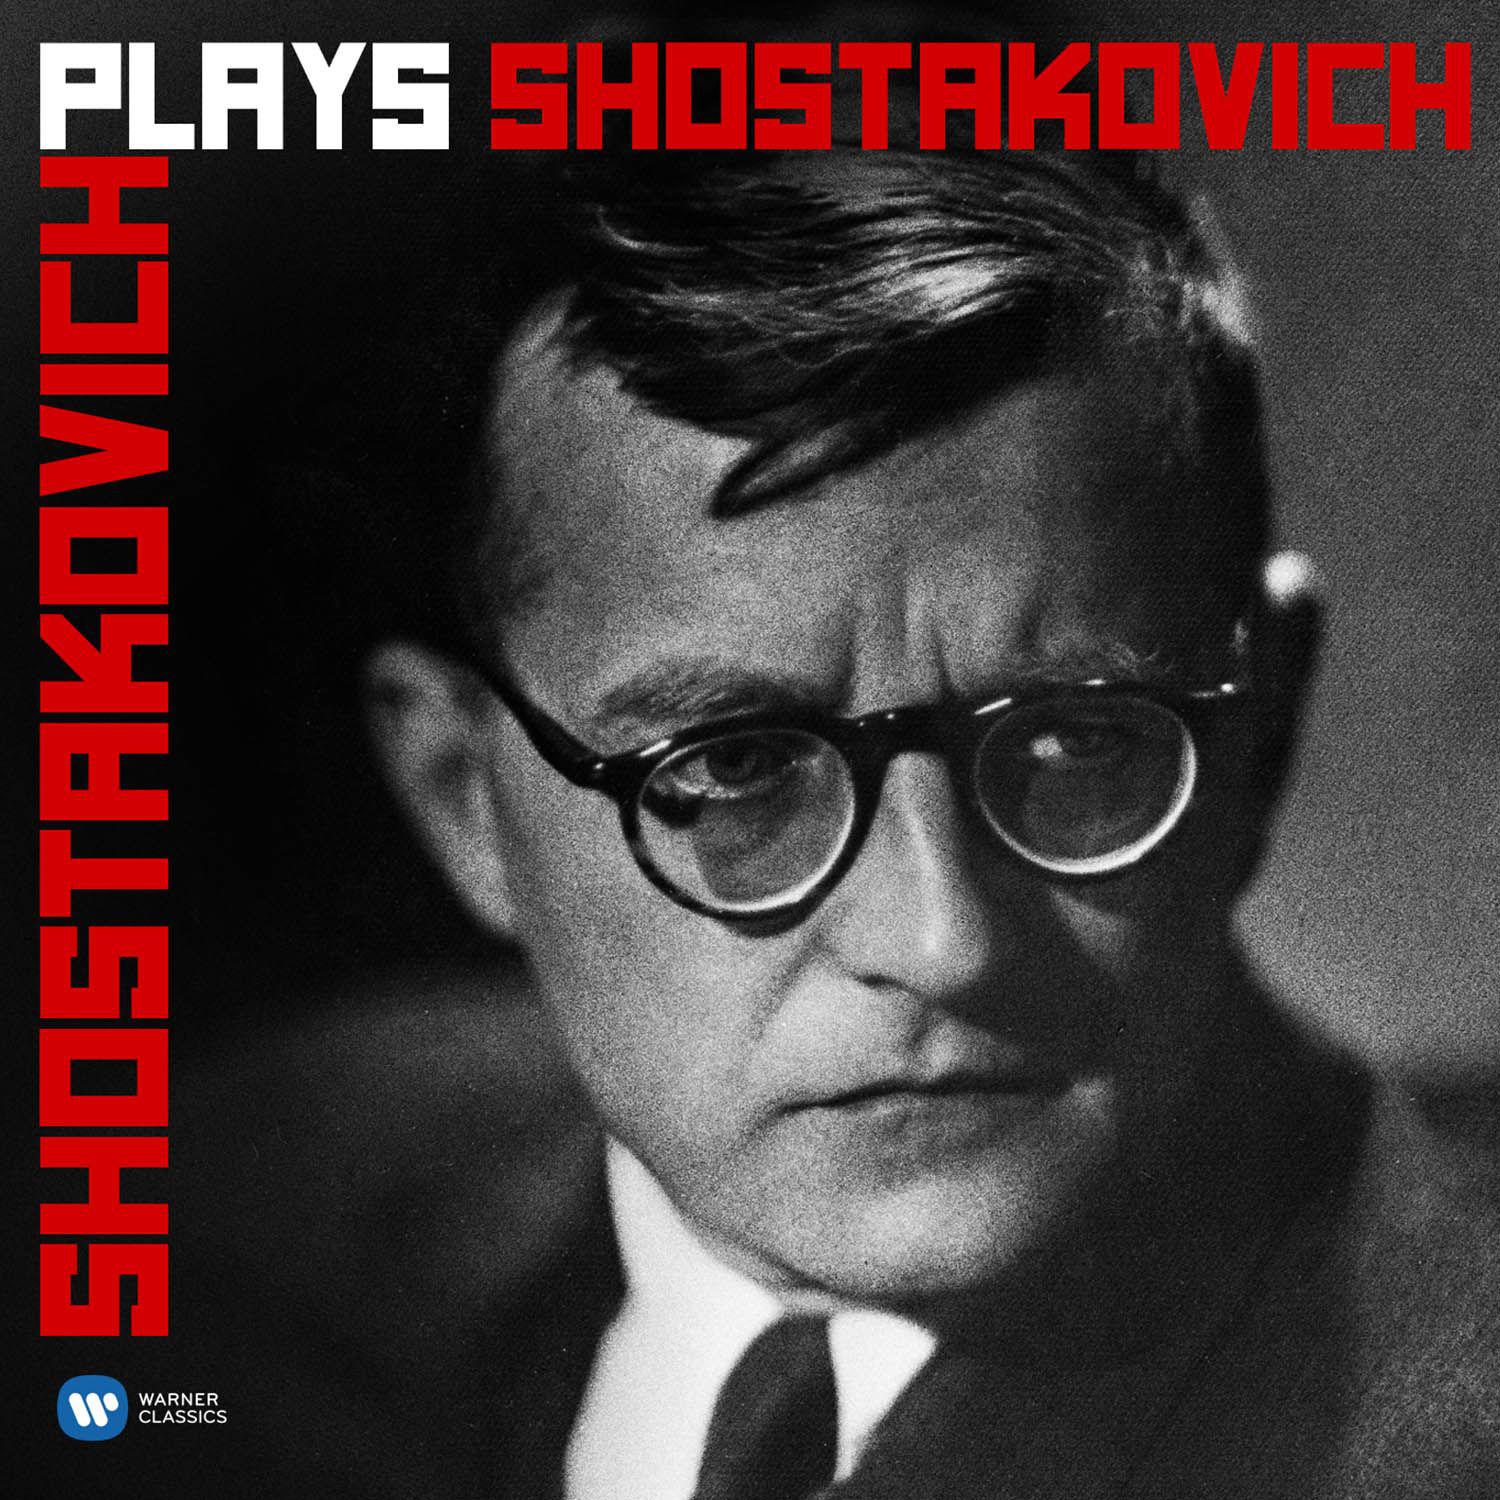 Shostakovich:24 Preludes and Fugues, Op. 87: No. 5 in D Major, Allegretto